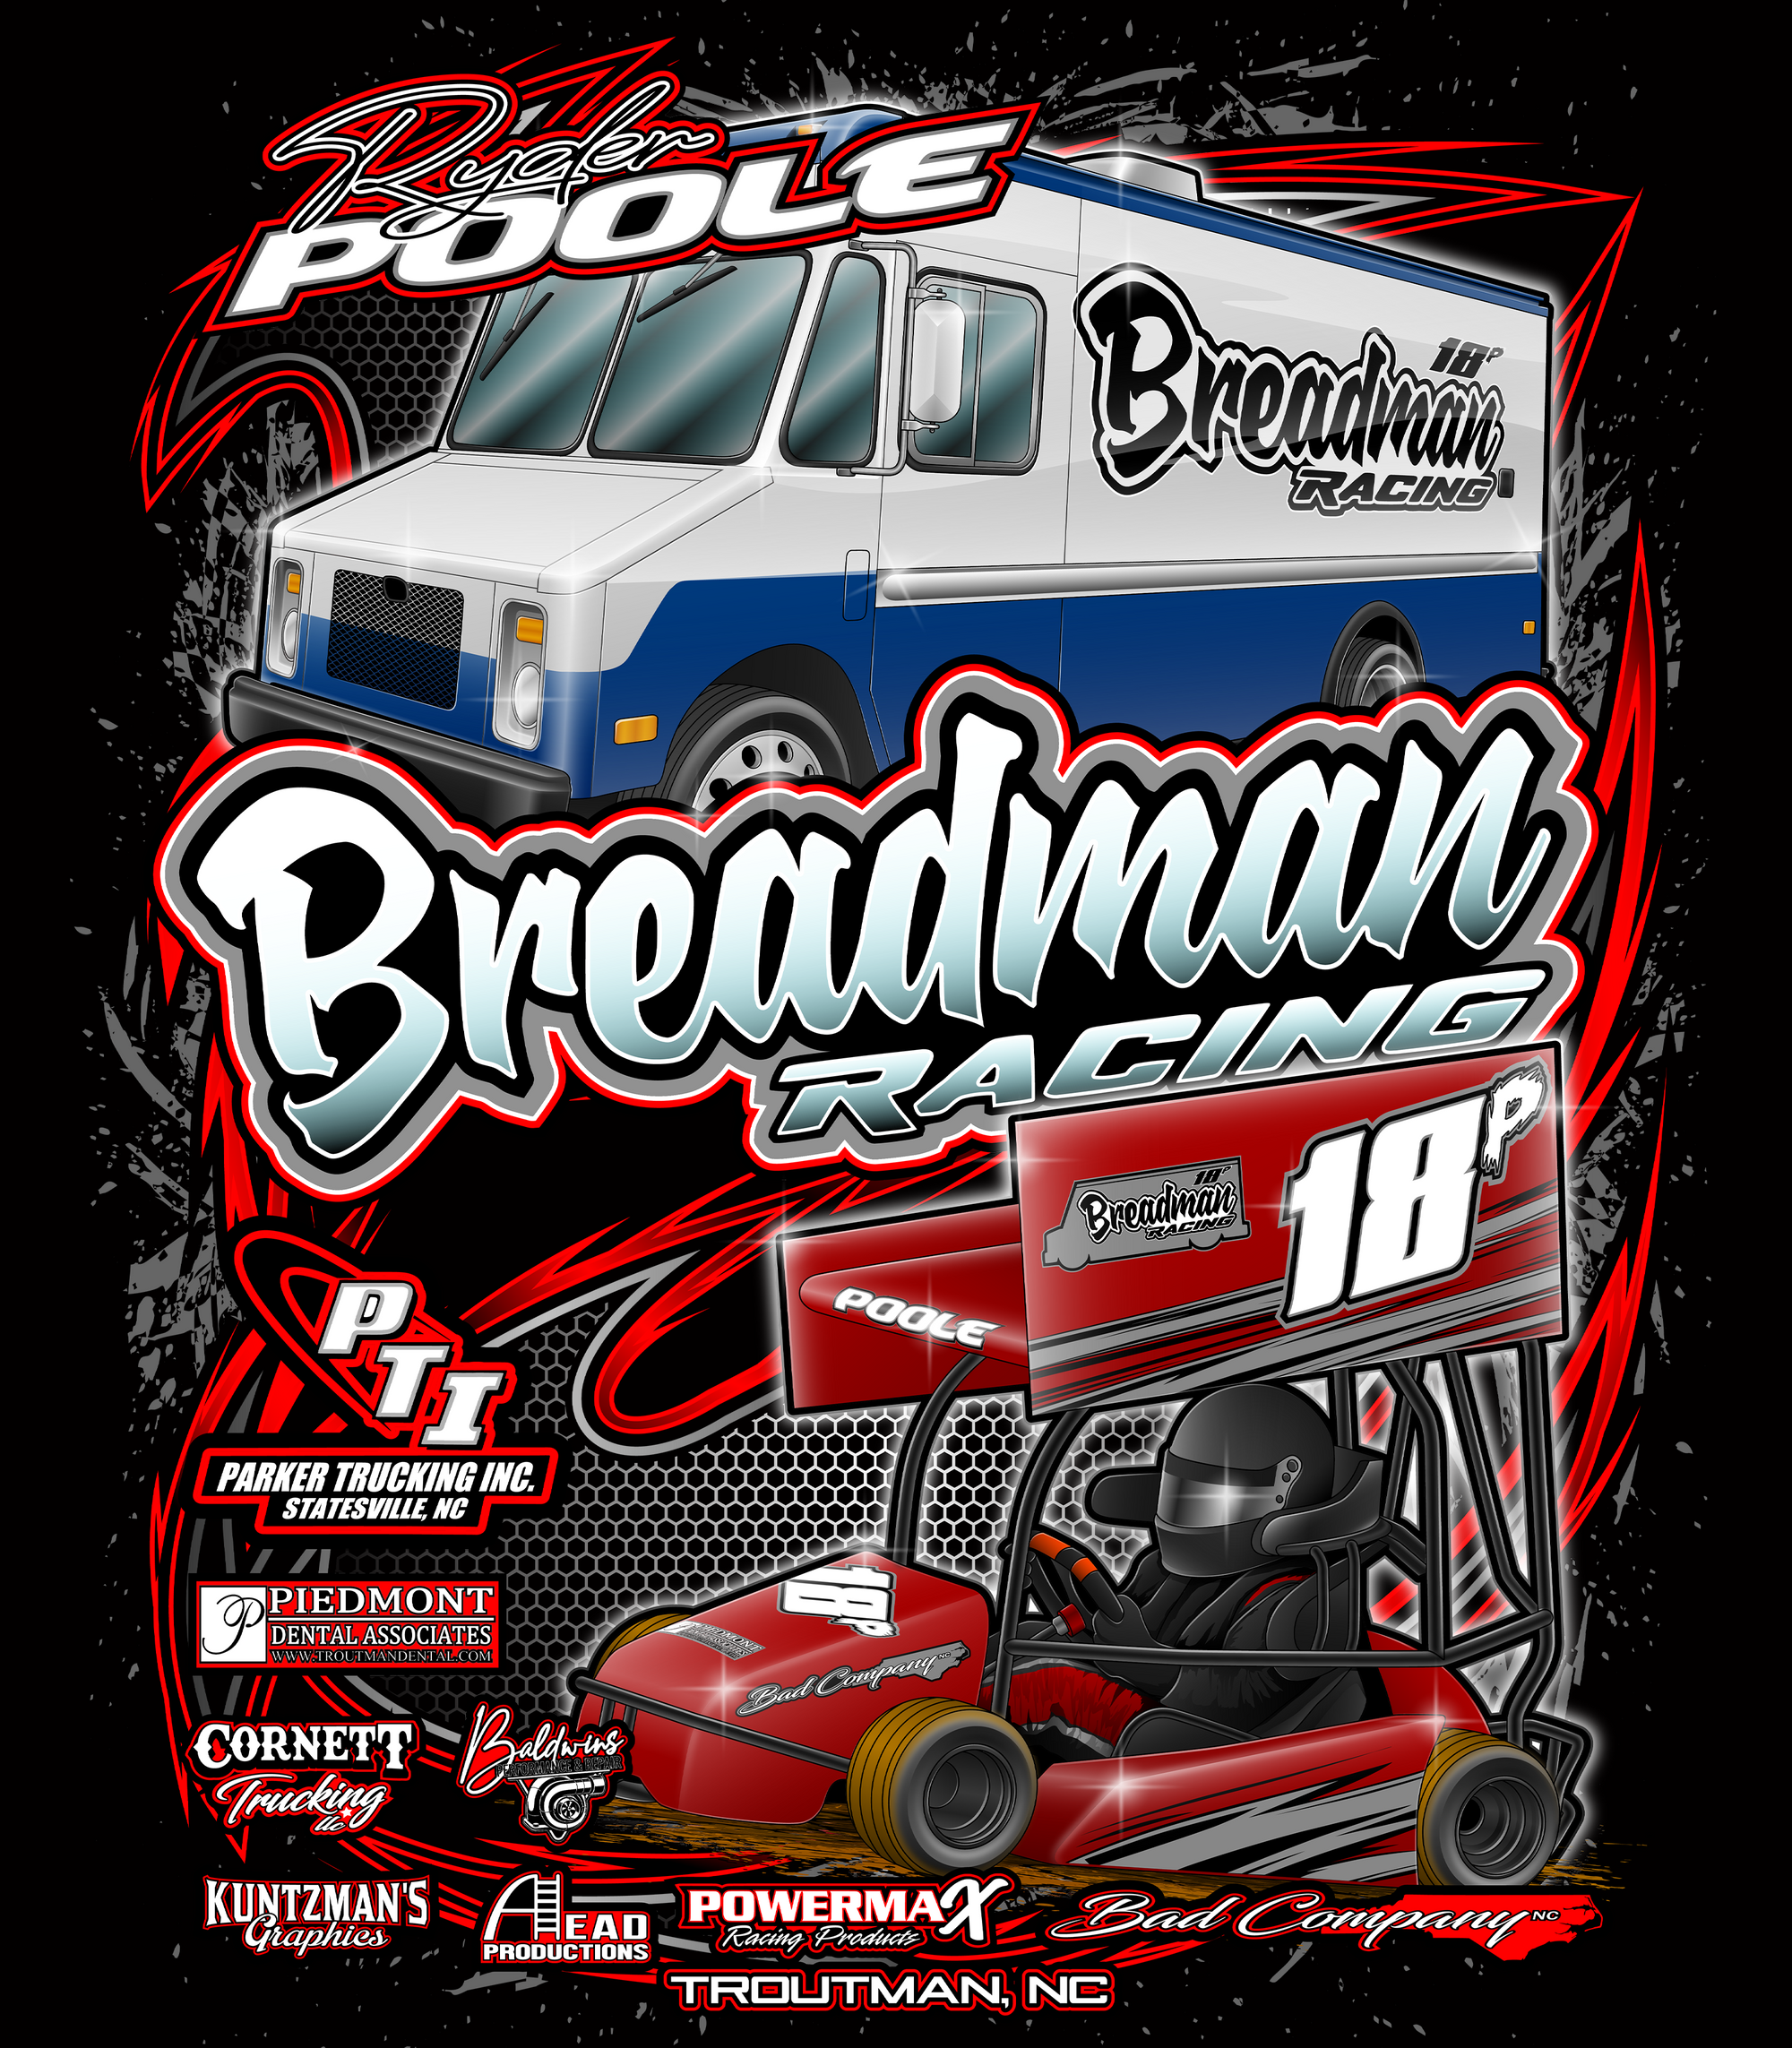 Breadman Racing